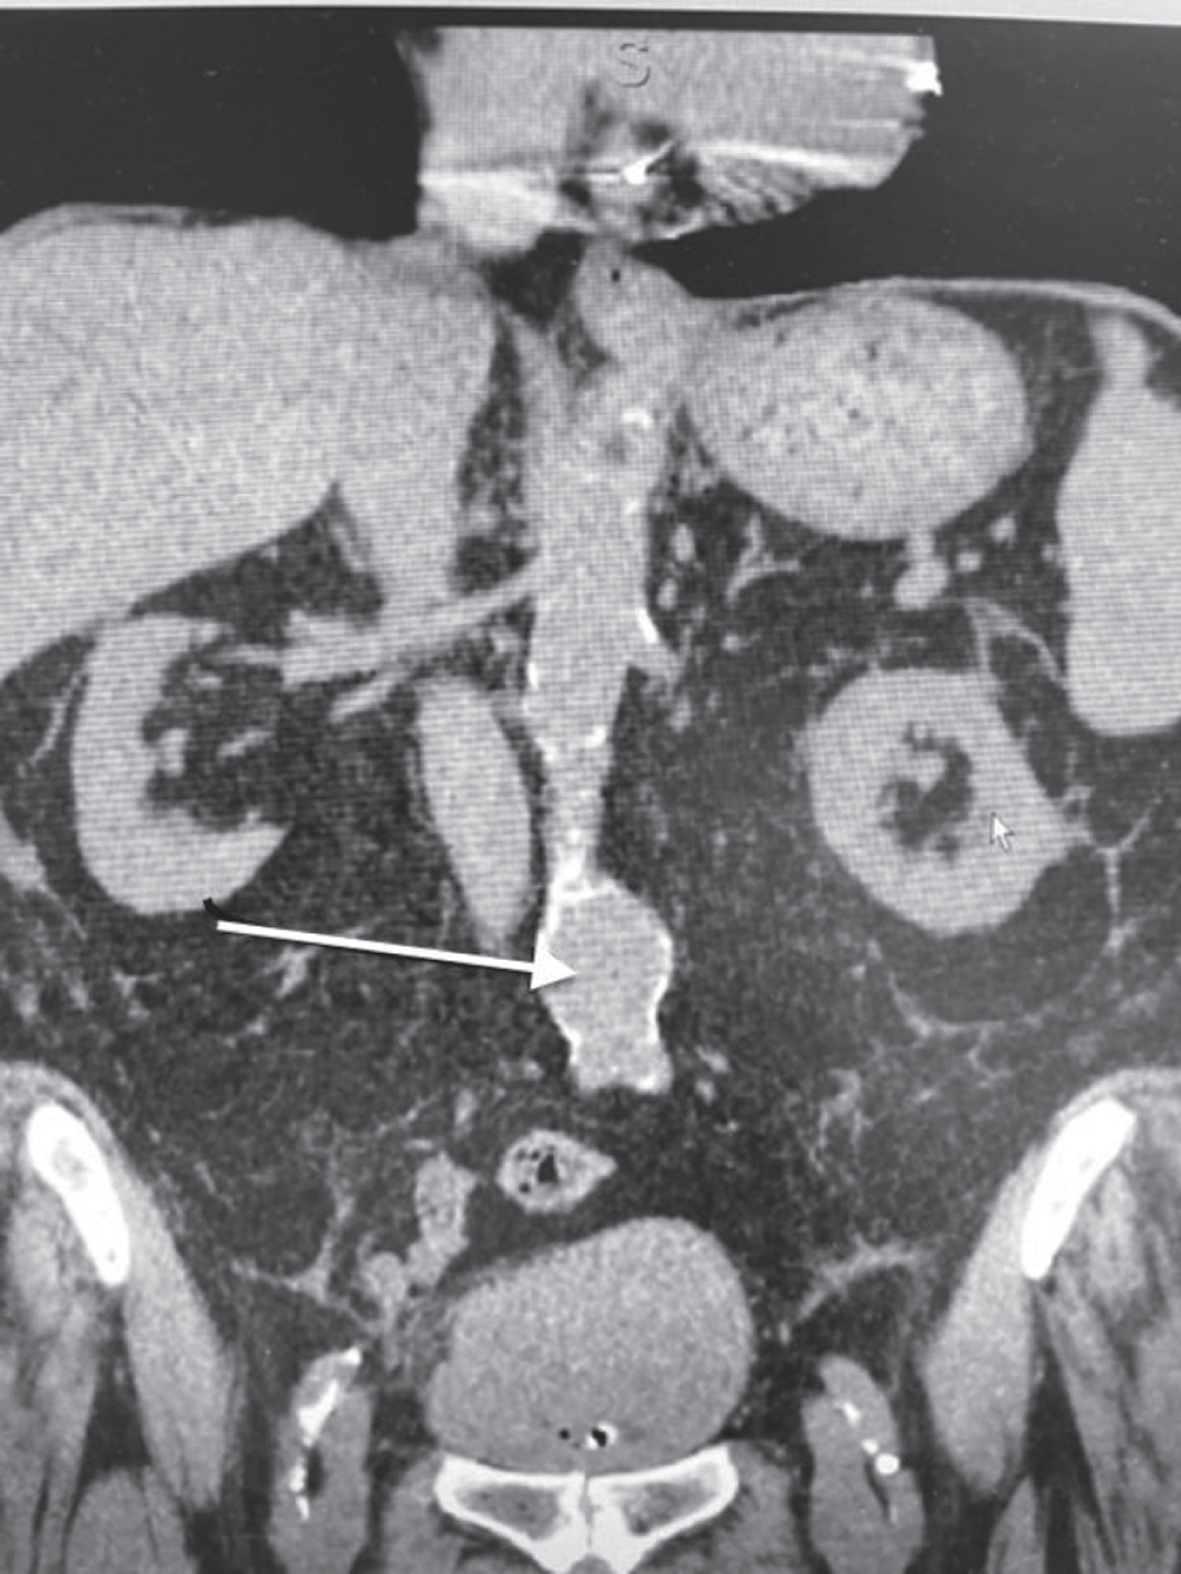 CT scan identifying the abdominal aorta aneurysm (arrow).